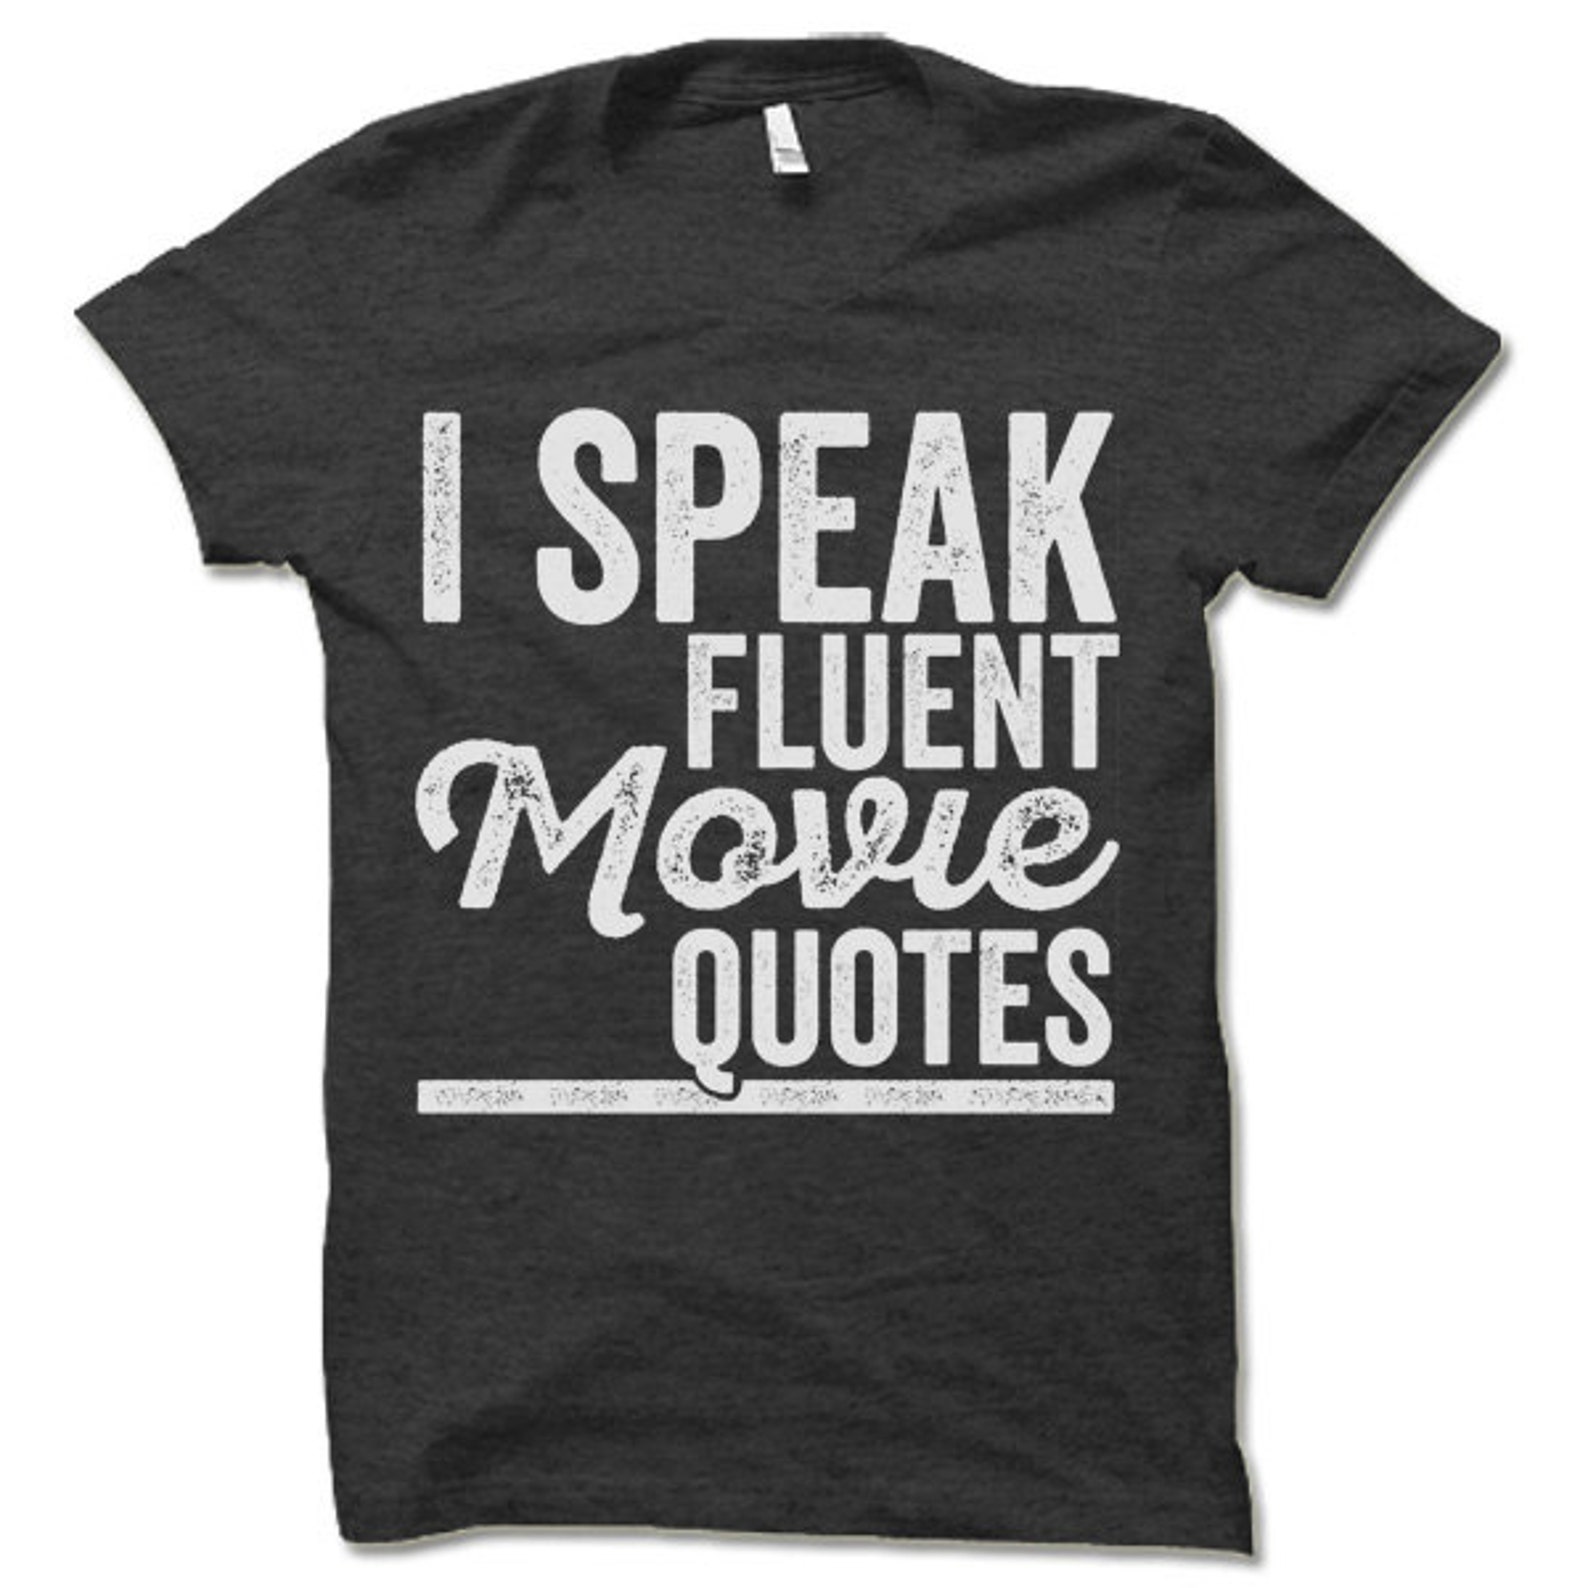 I speak фото. Quotes on t-Shirts. Футболка унисекс АЛИЭКСПРЕСС. Песни i speak. Speak fluent